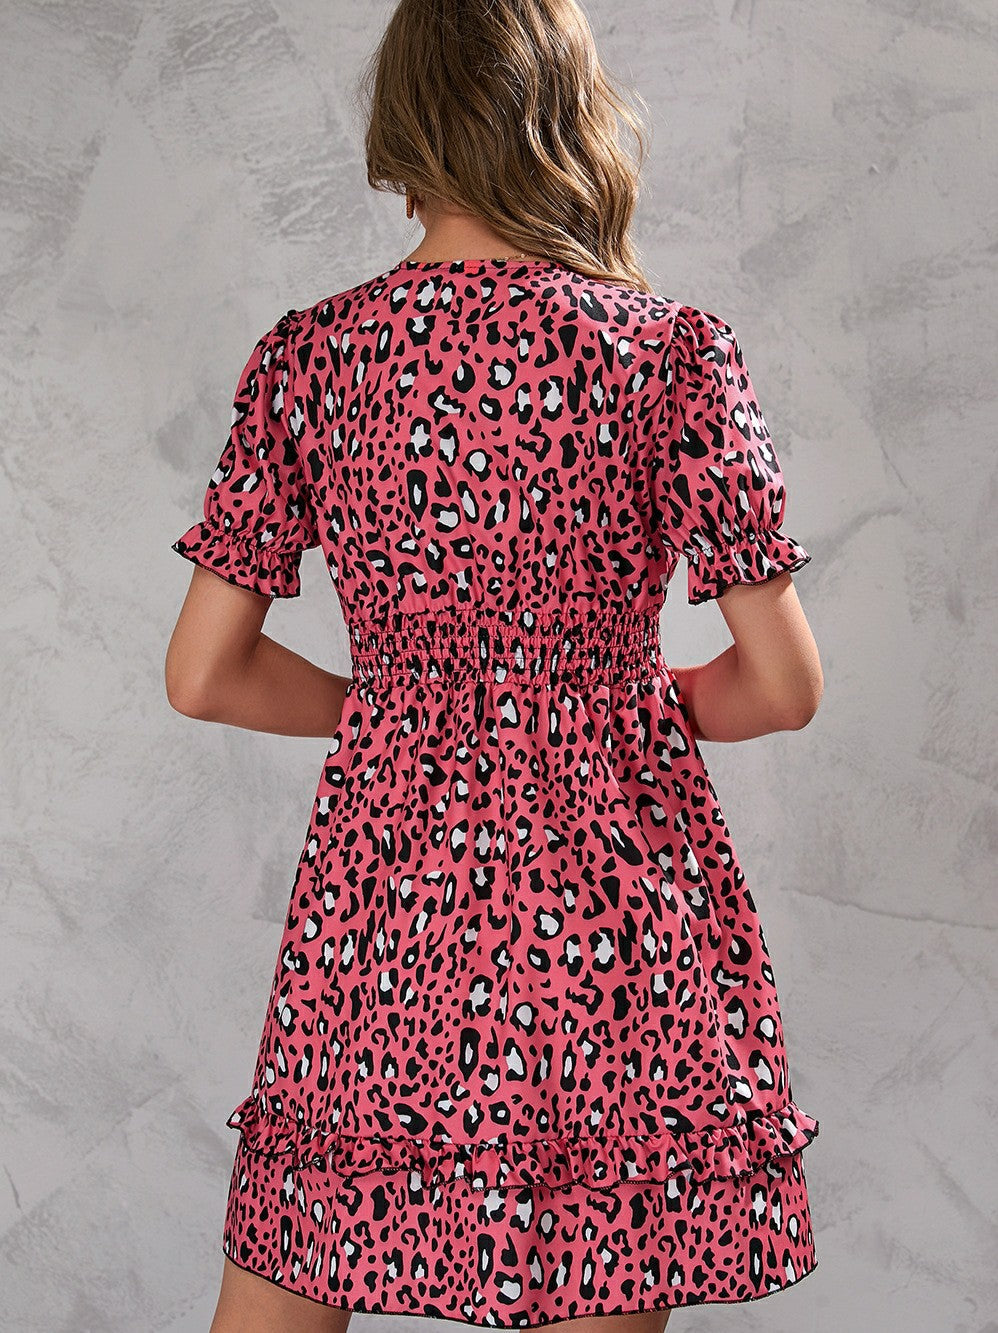 Leopard Print Short Sleeve Dress